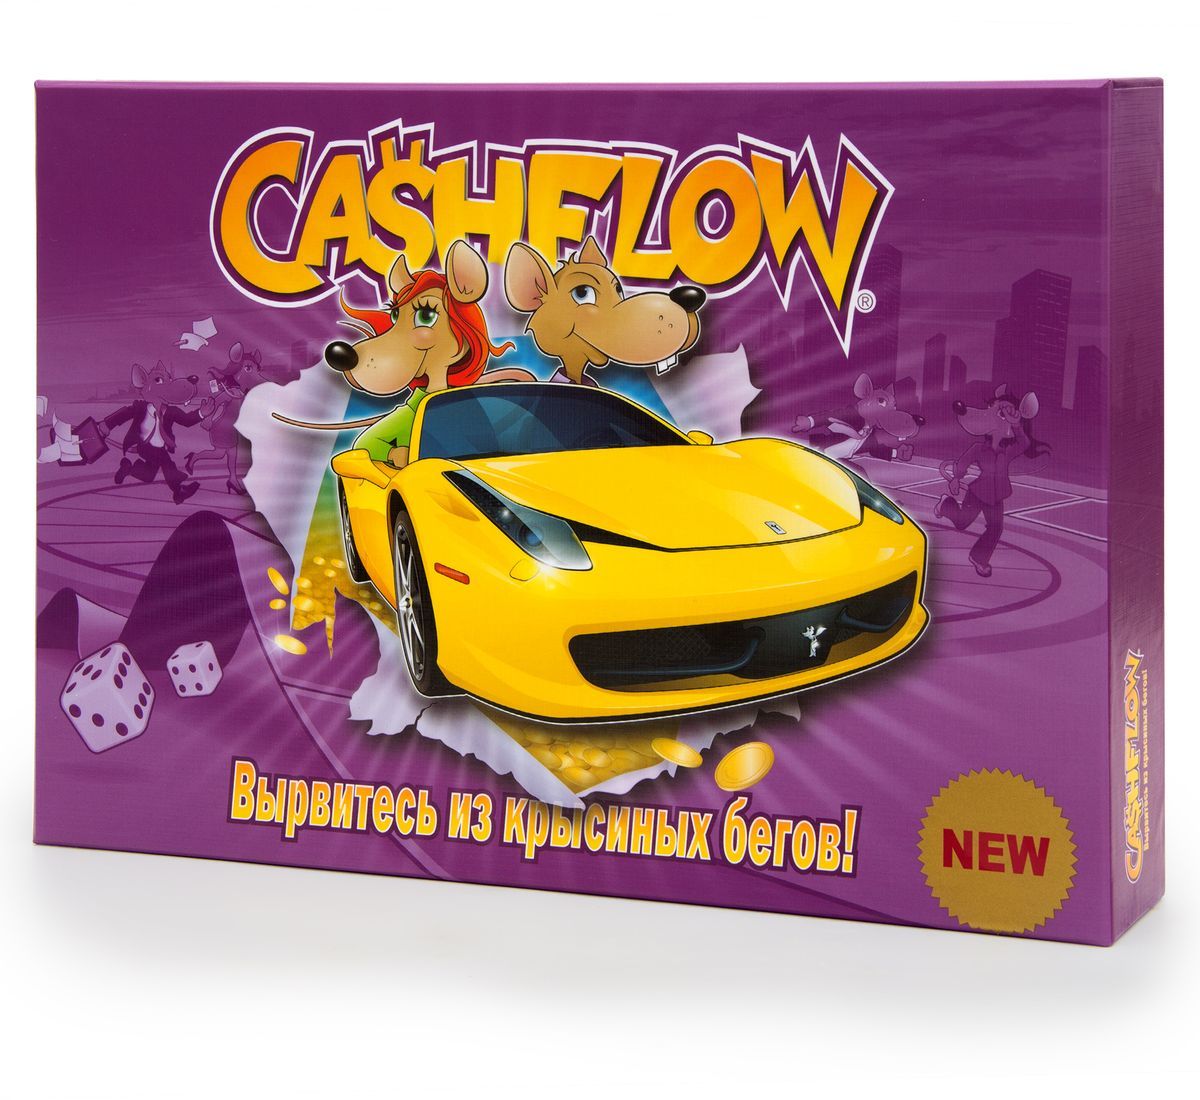 Cashflow         2016 